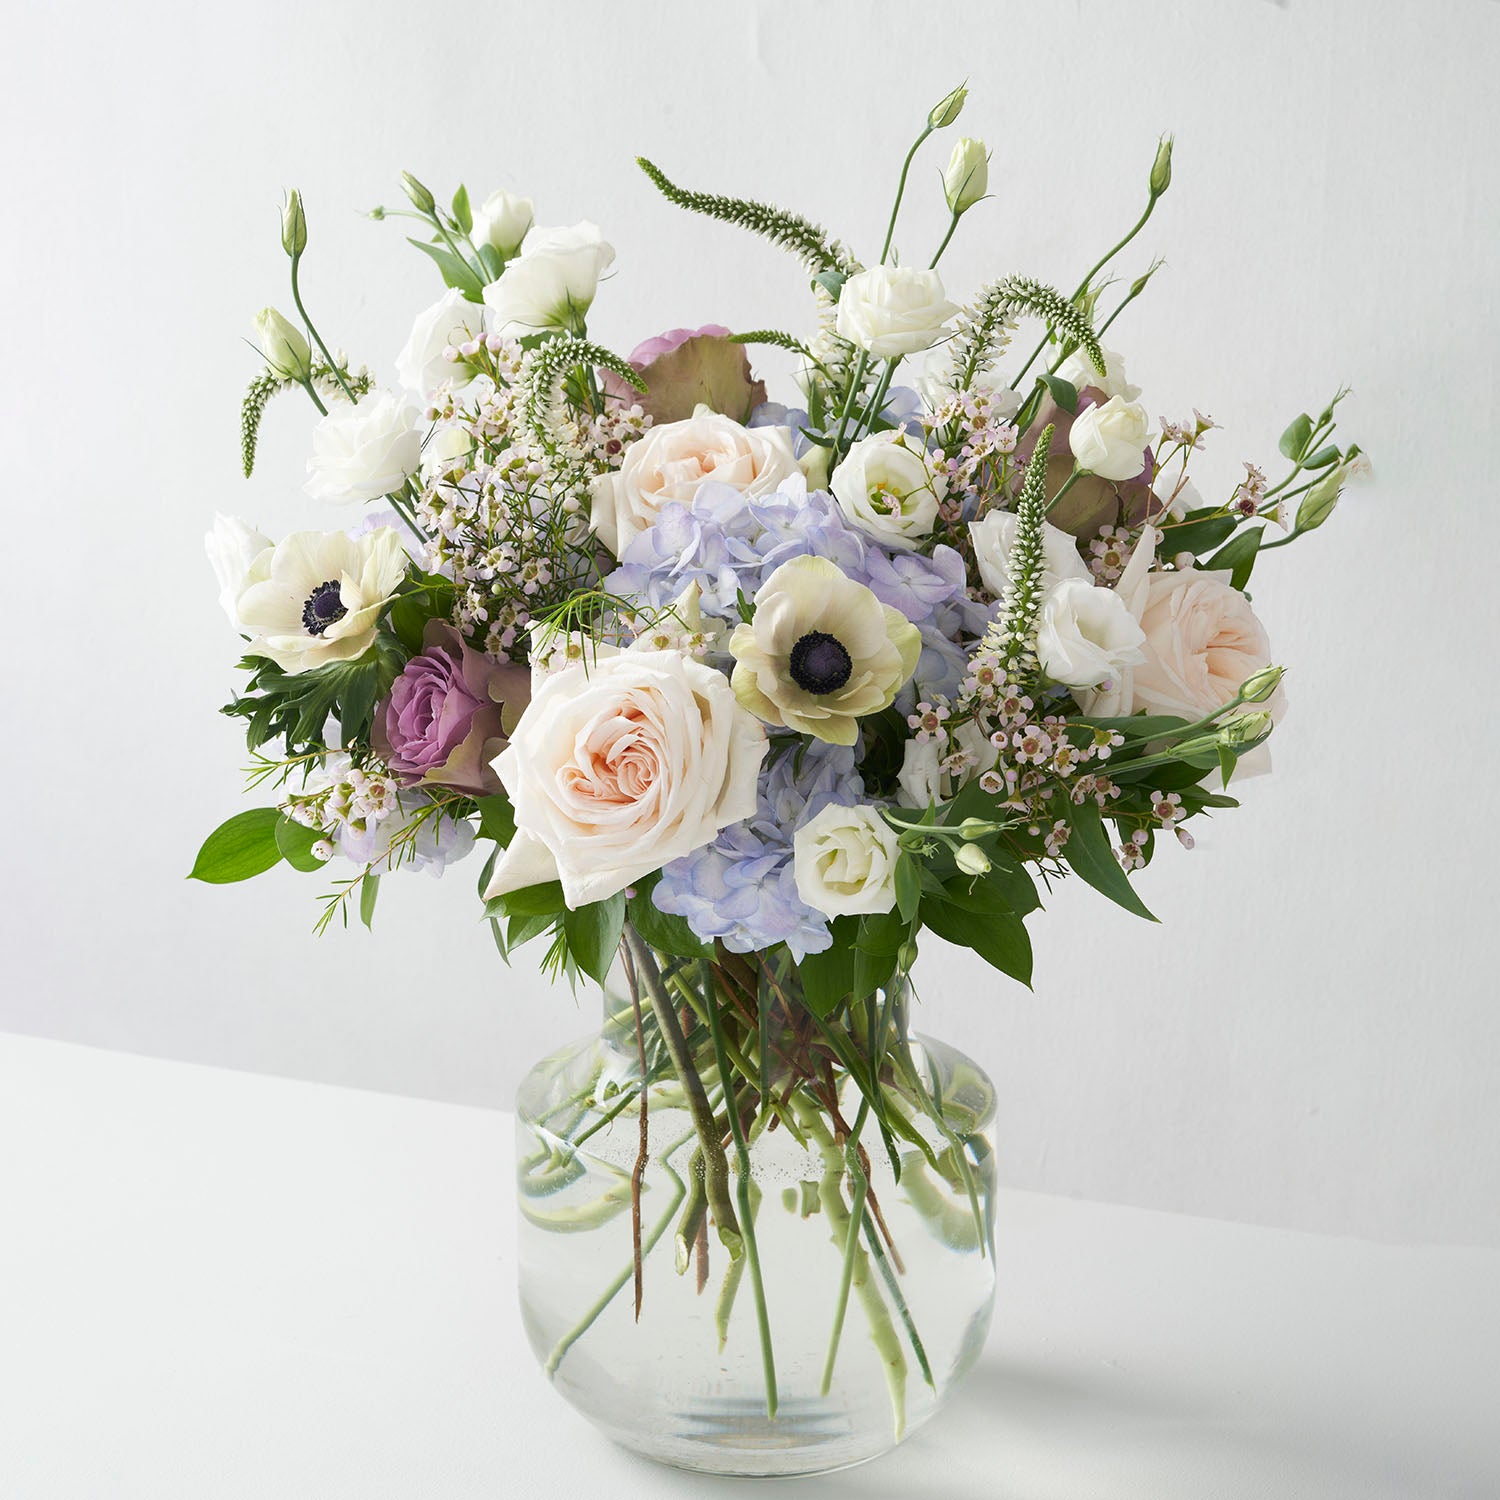 Glass vase full of blue, lavender, cream and white flowers on white background.